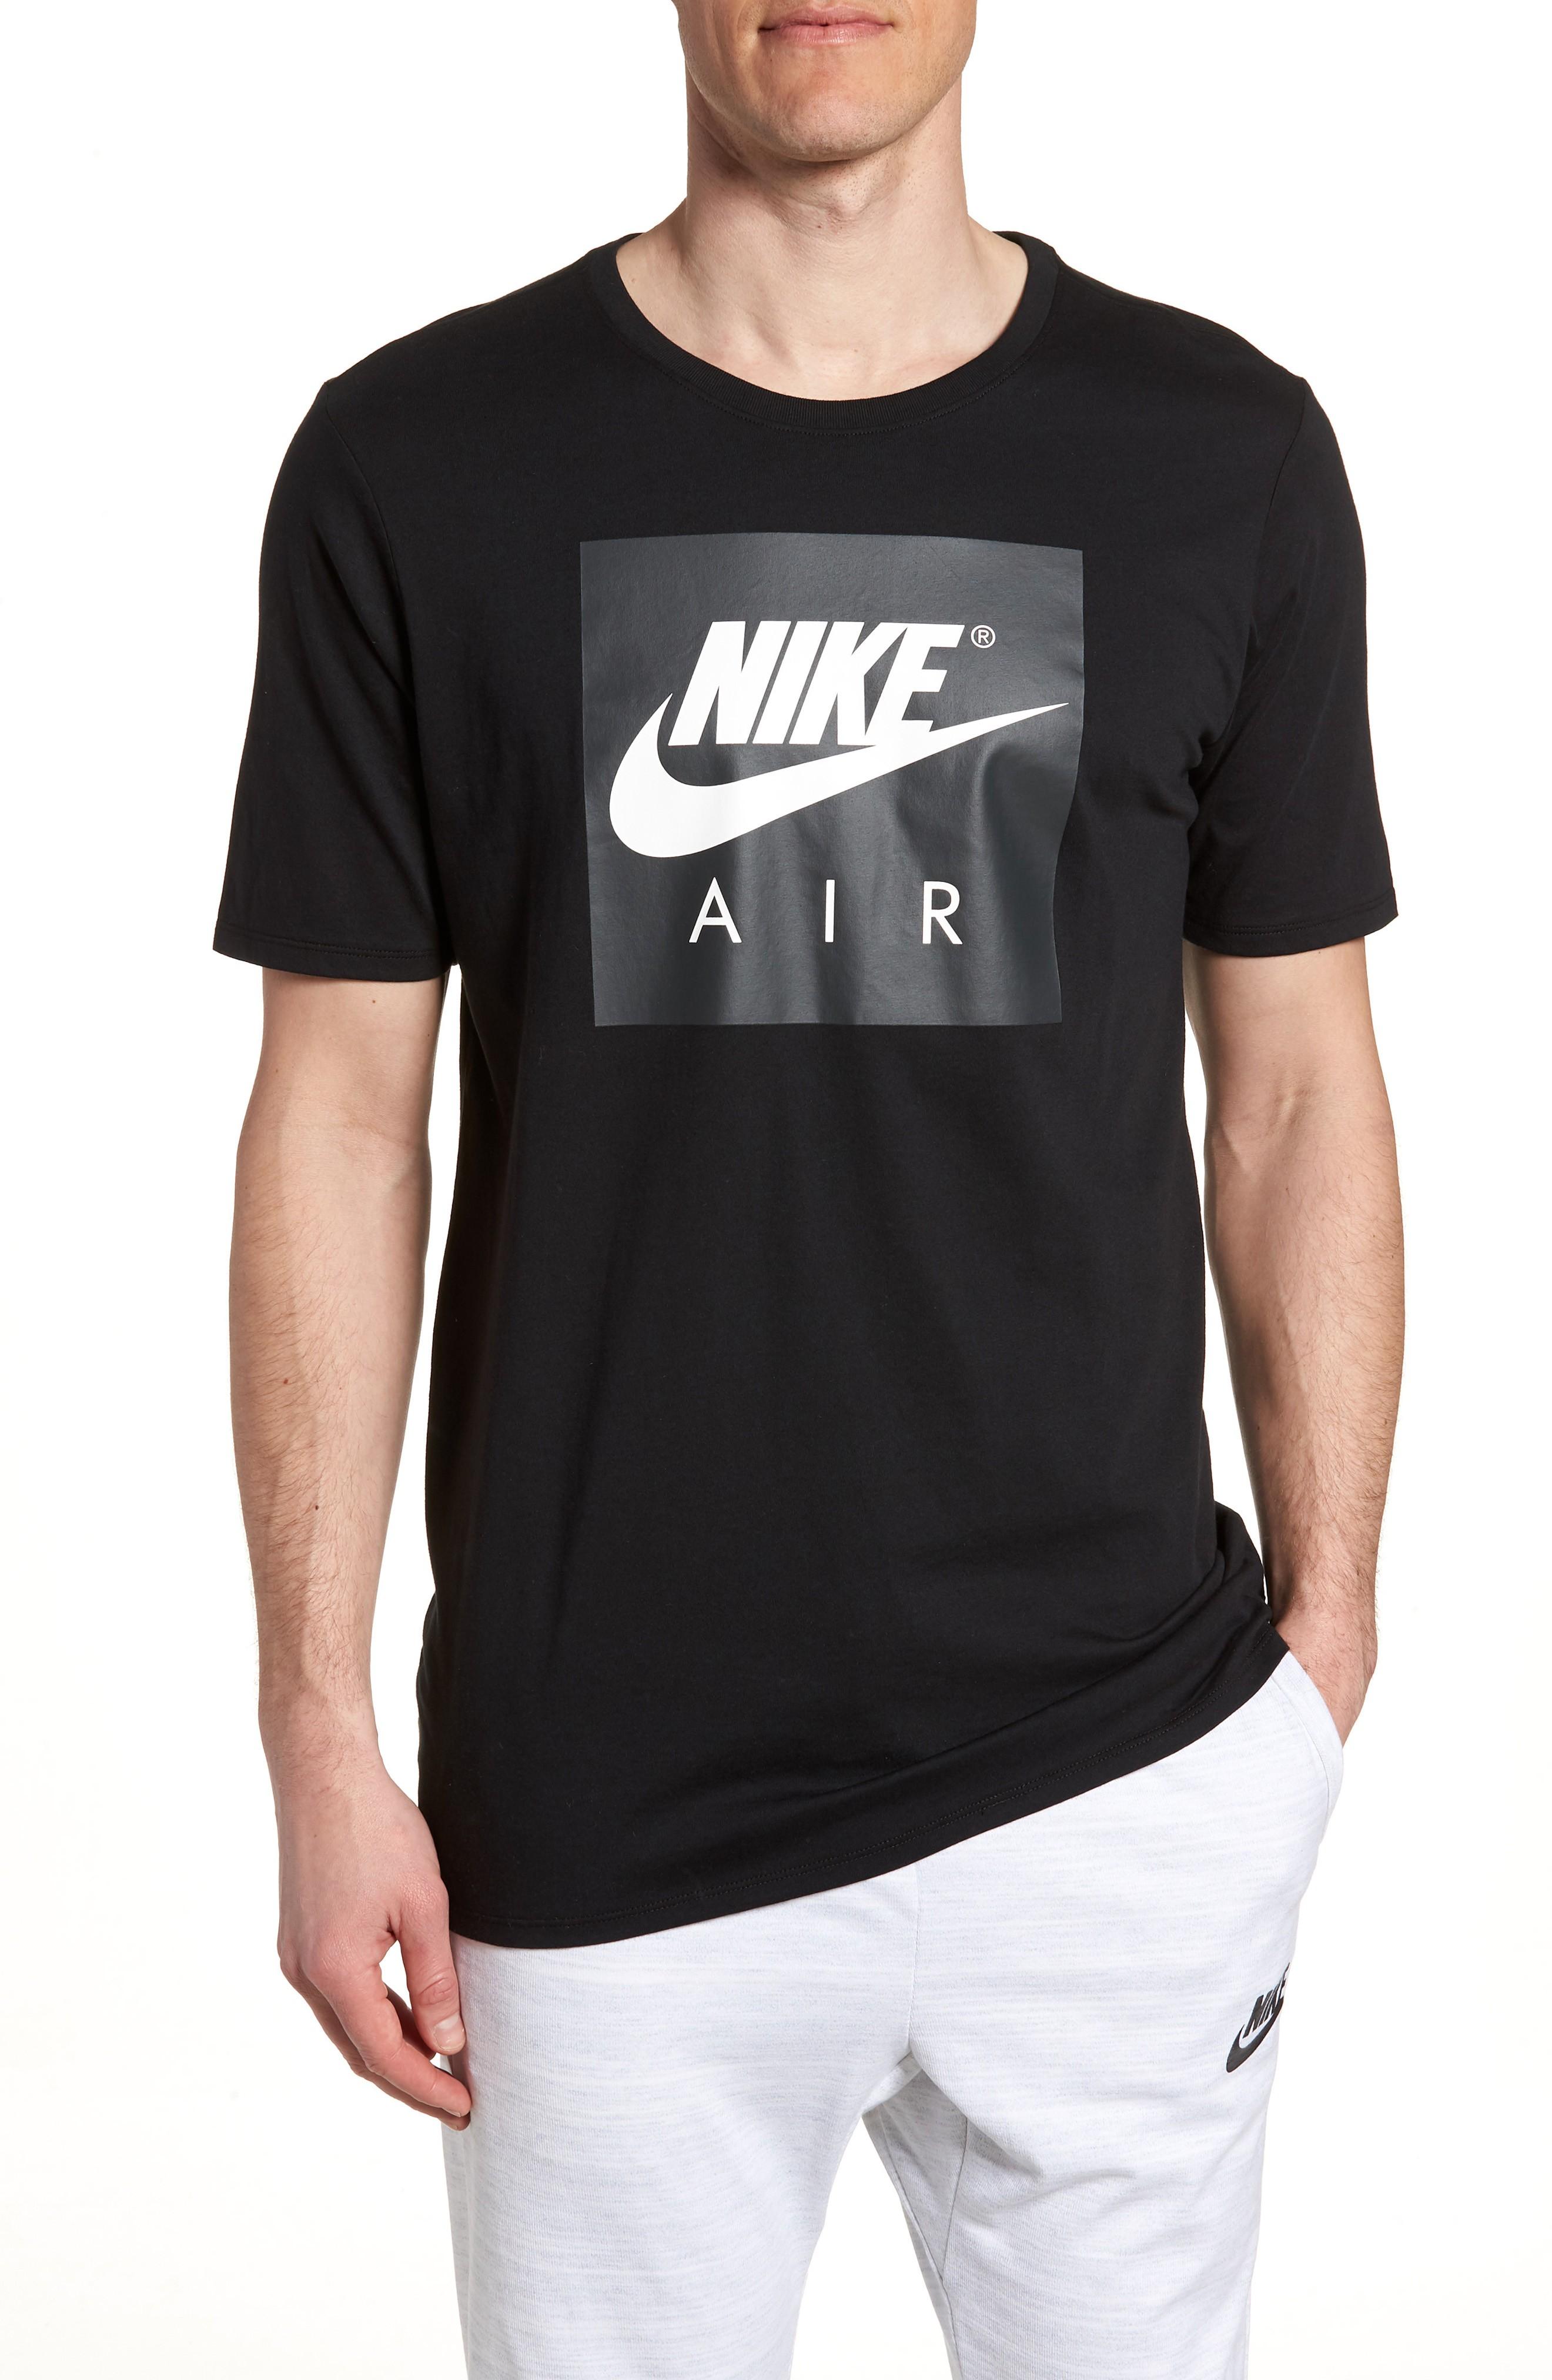 nike boxed air t shirt